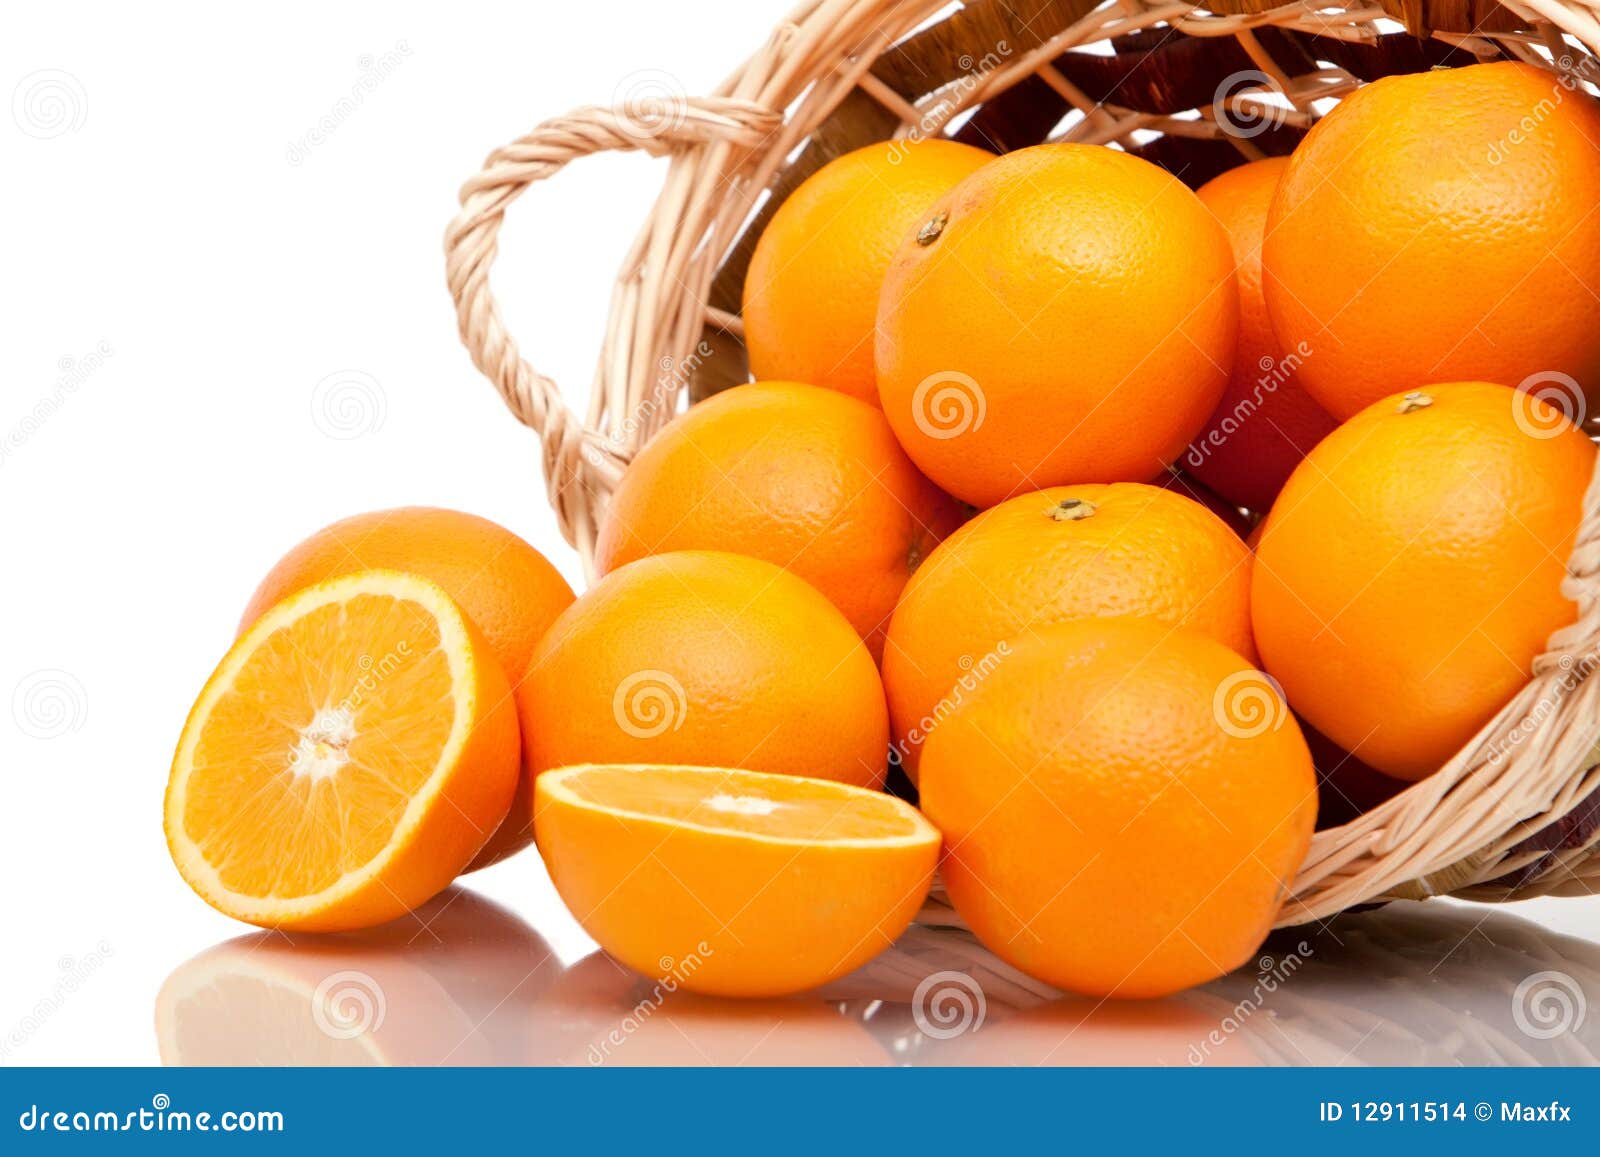 Basket Of Oranges Stock Images - Image: 129115141300 x 957